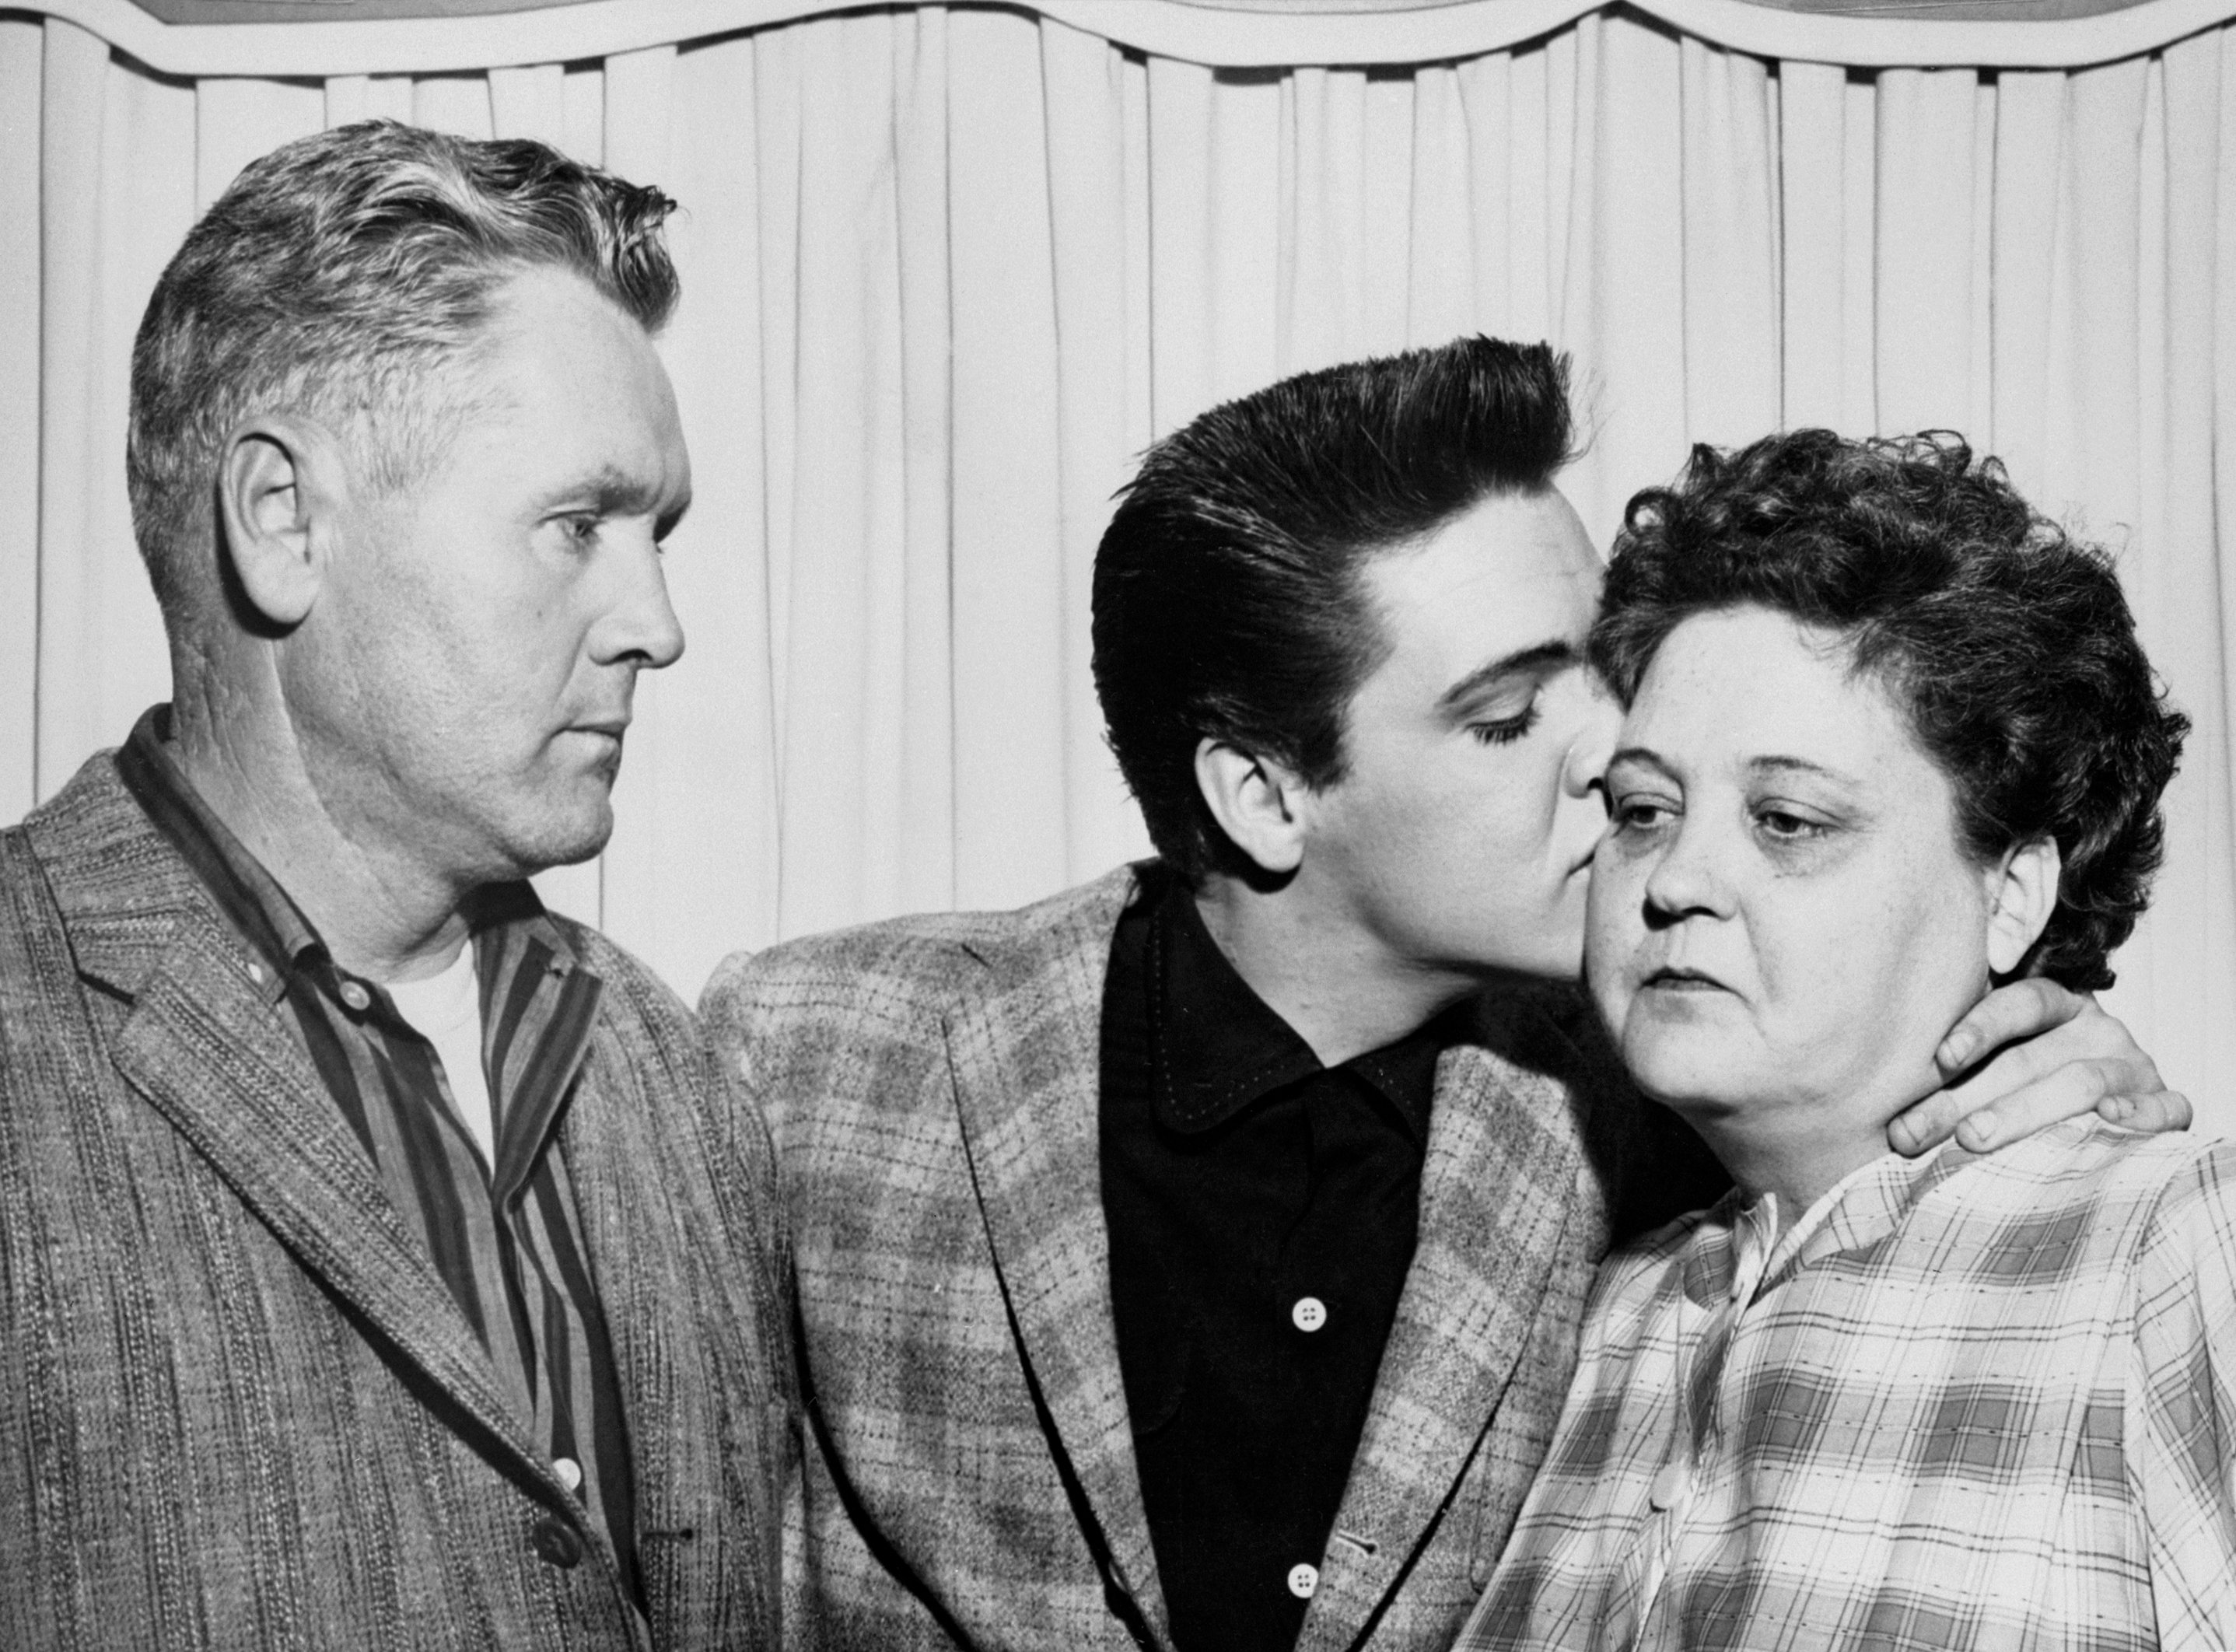 Vernon, Elvis, and Gladys Presley near curtains